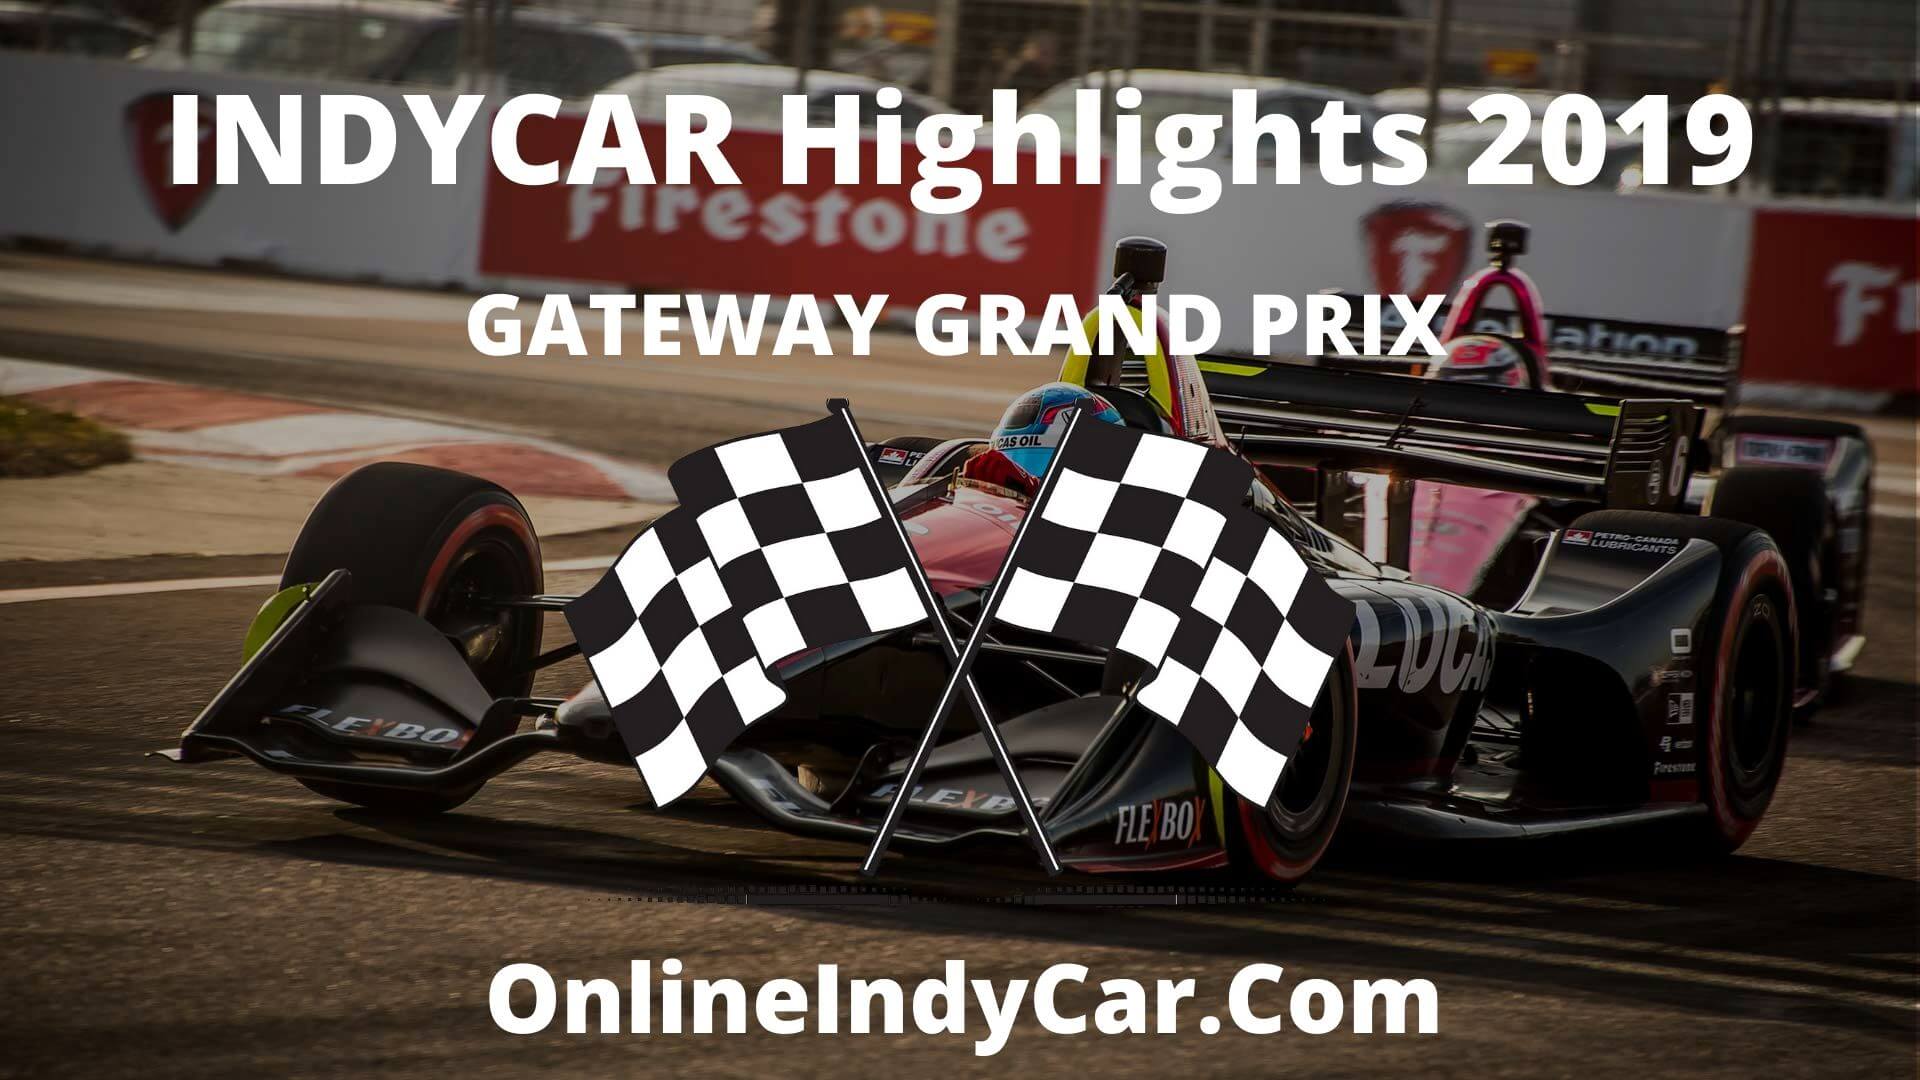 Gateway Grand Prix highlights 2019